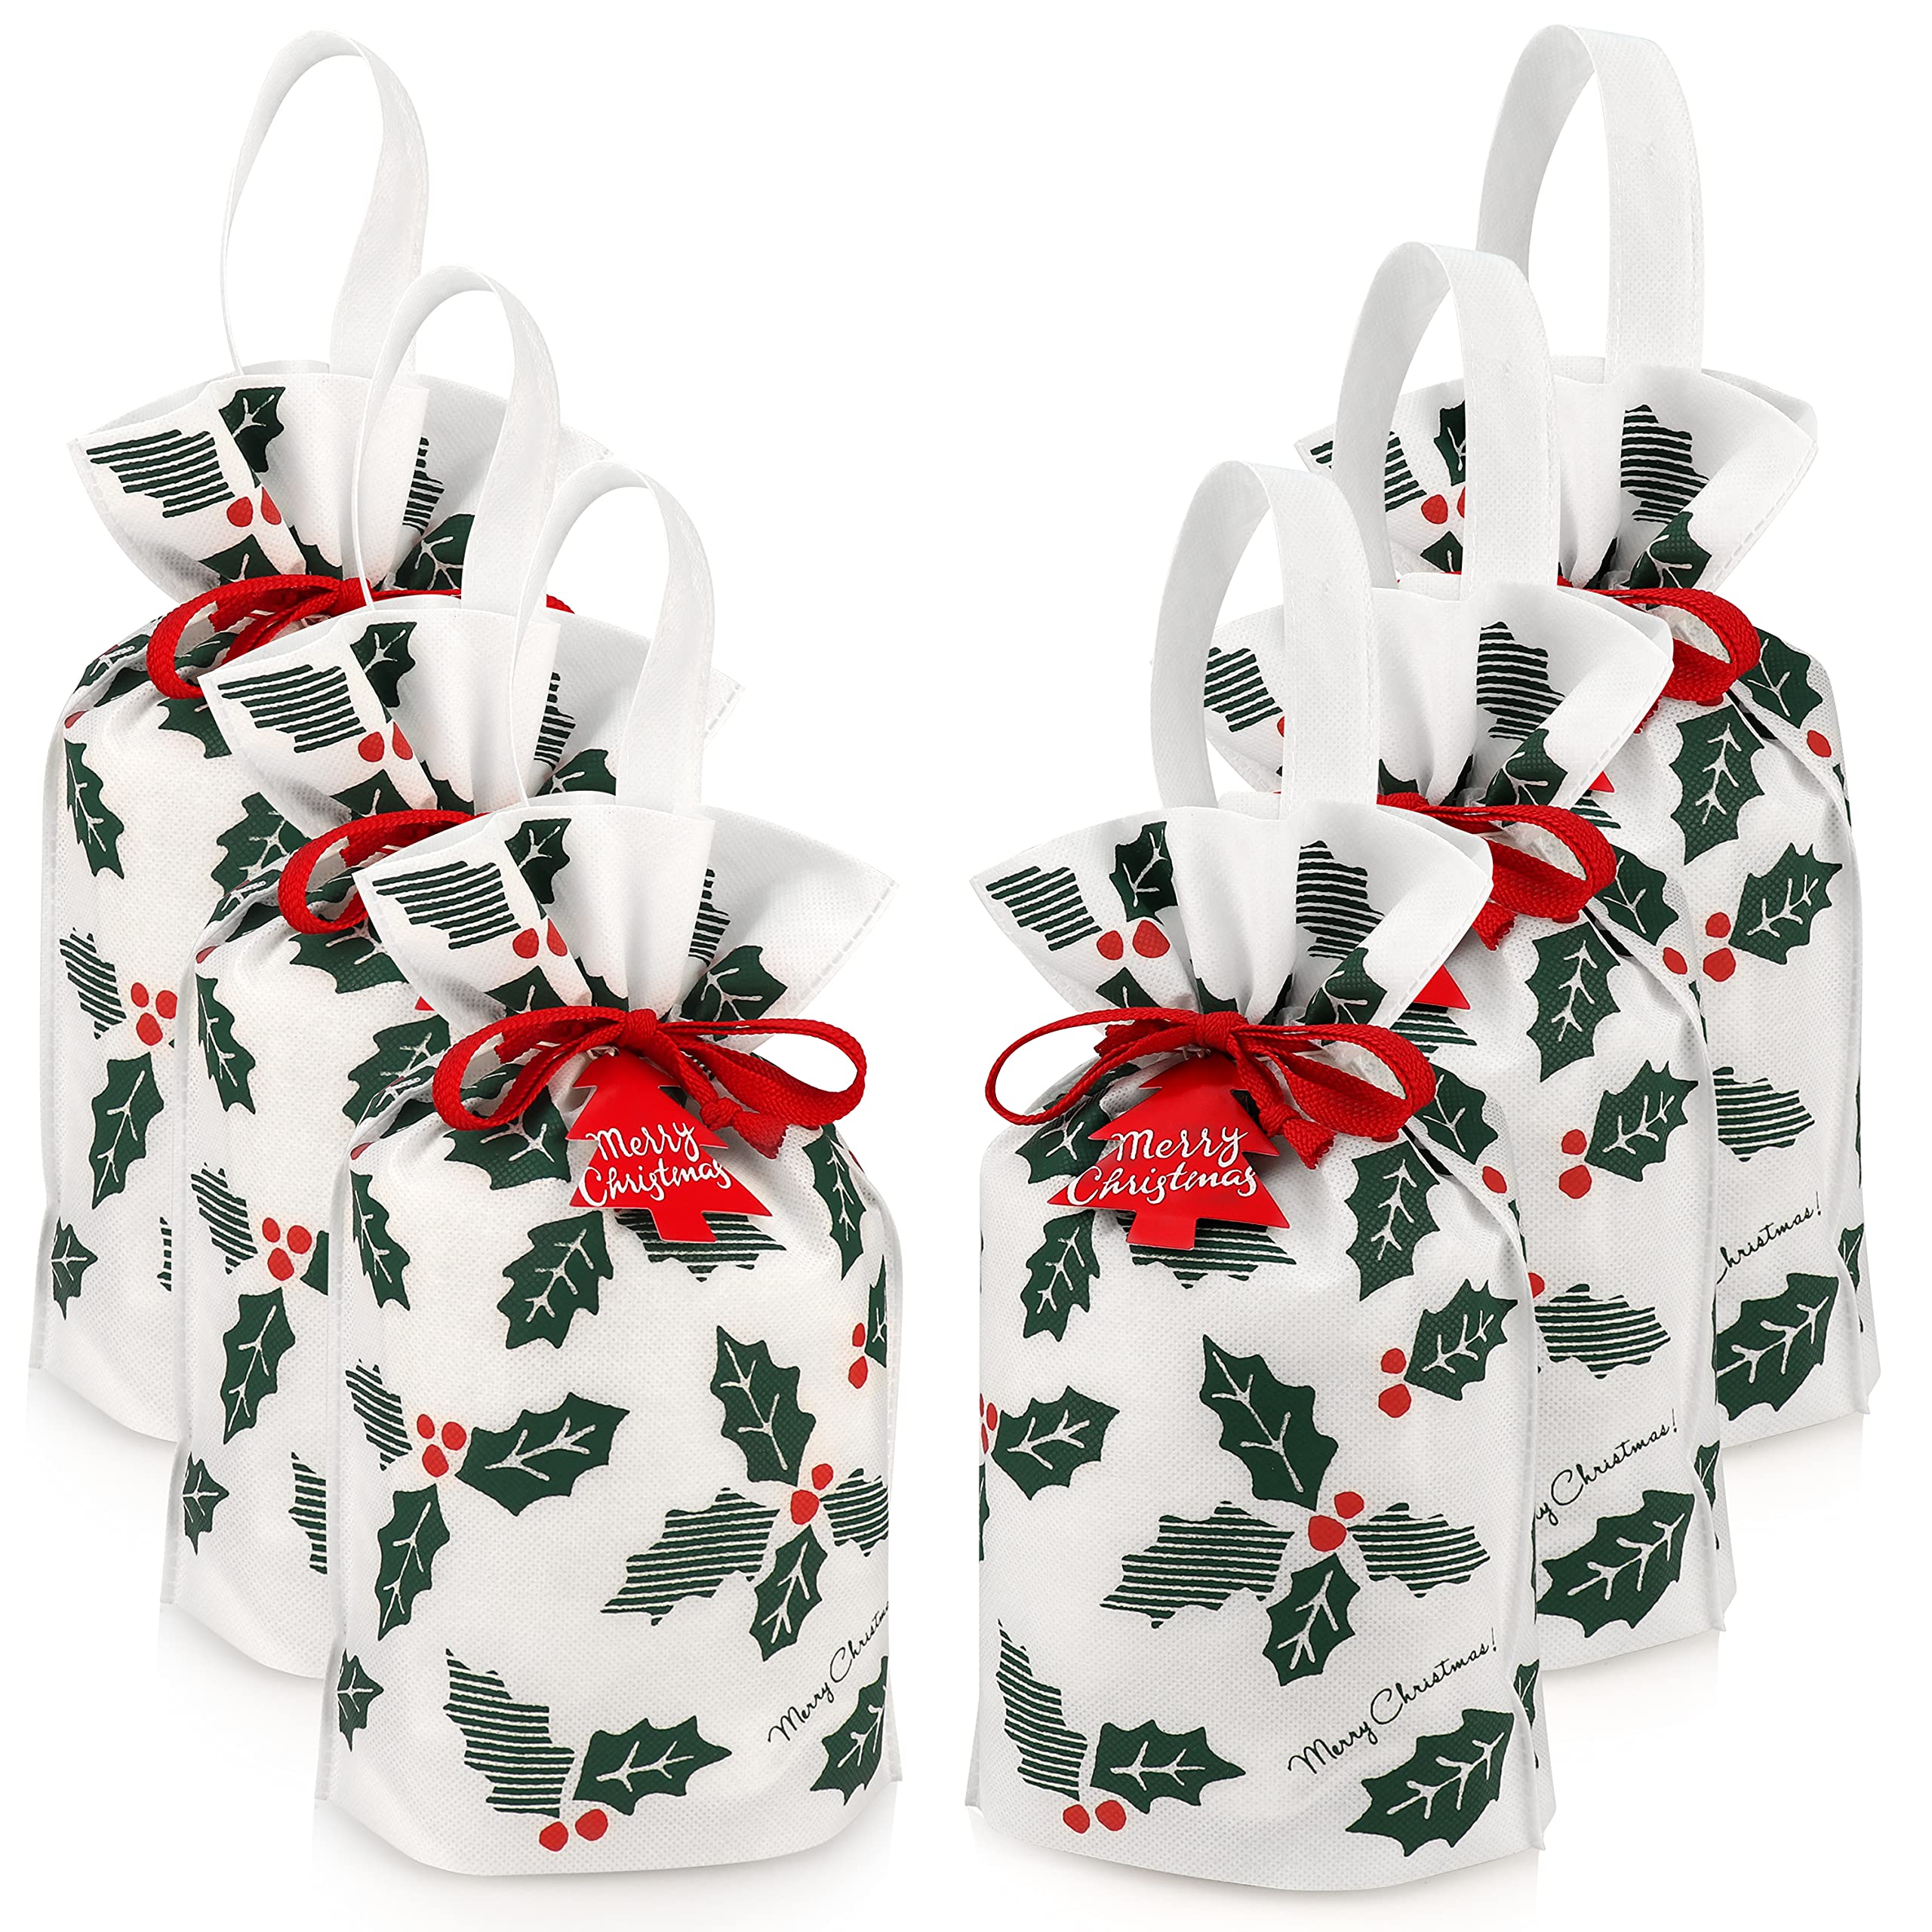 Mistorri Fabric gift Bags for christmas Presents, Set of 6 christmas Drawstring gift Bags, cloth gift Bags, christmas gift Bags, christma